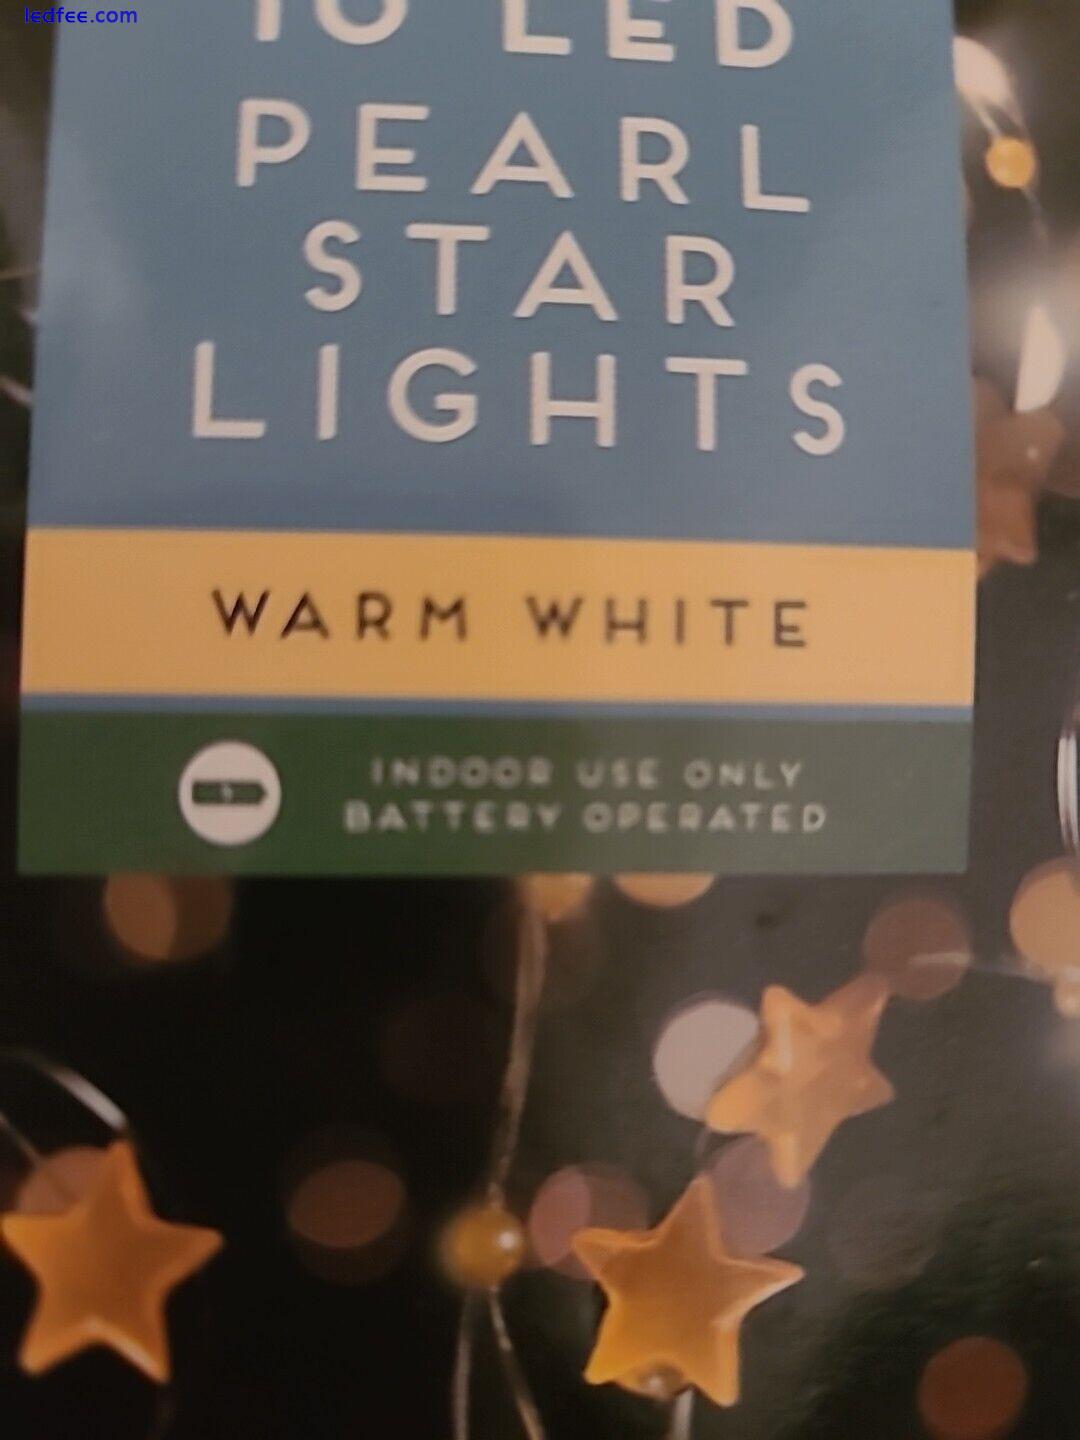 Battery Led Lights 10 LED Pearl Star Lights Brand New 1 Box 5 